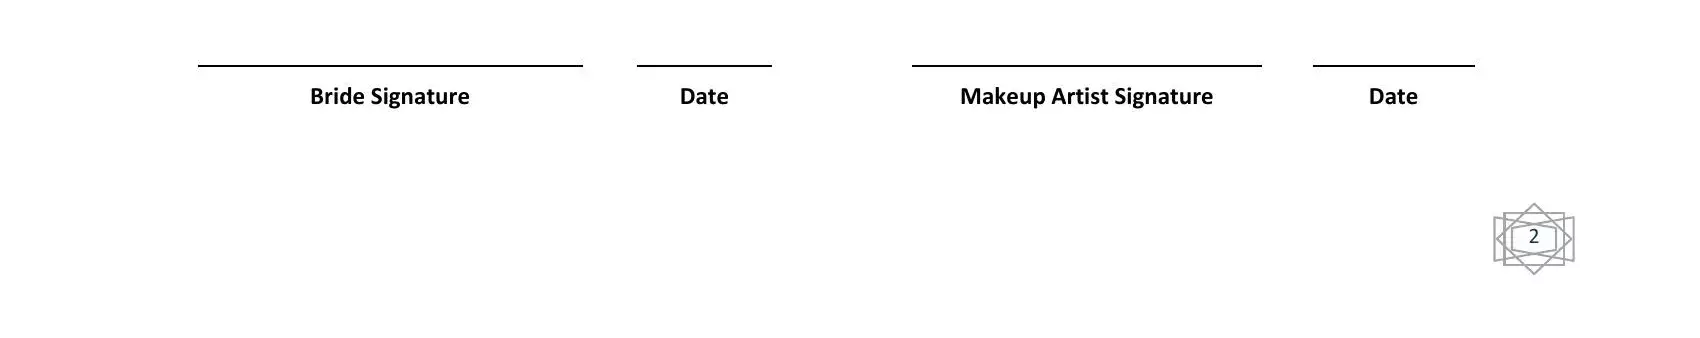 Bride Signature, Date, Makeup Artist Signature, and Date in bridal makeup pris form